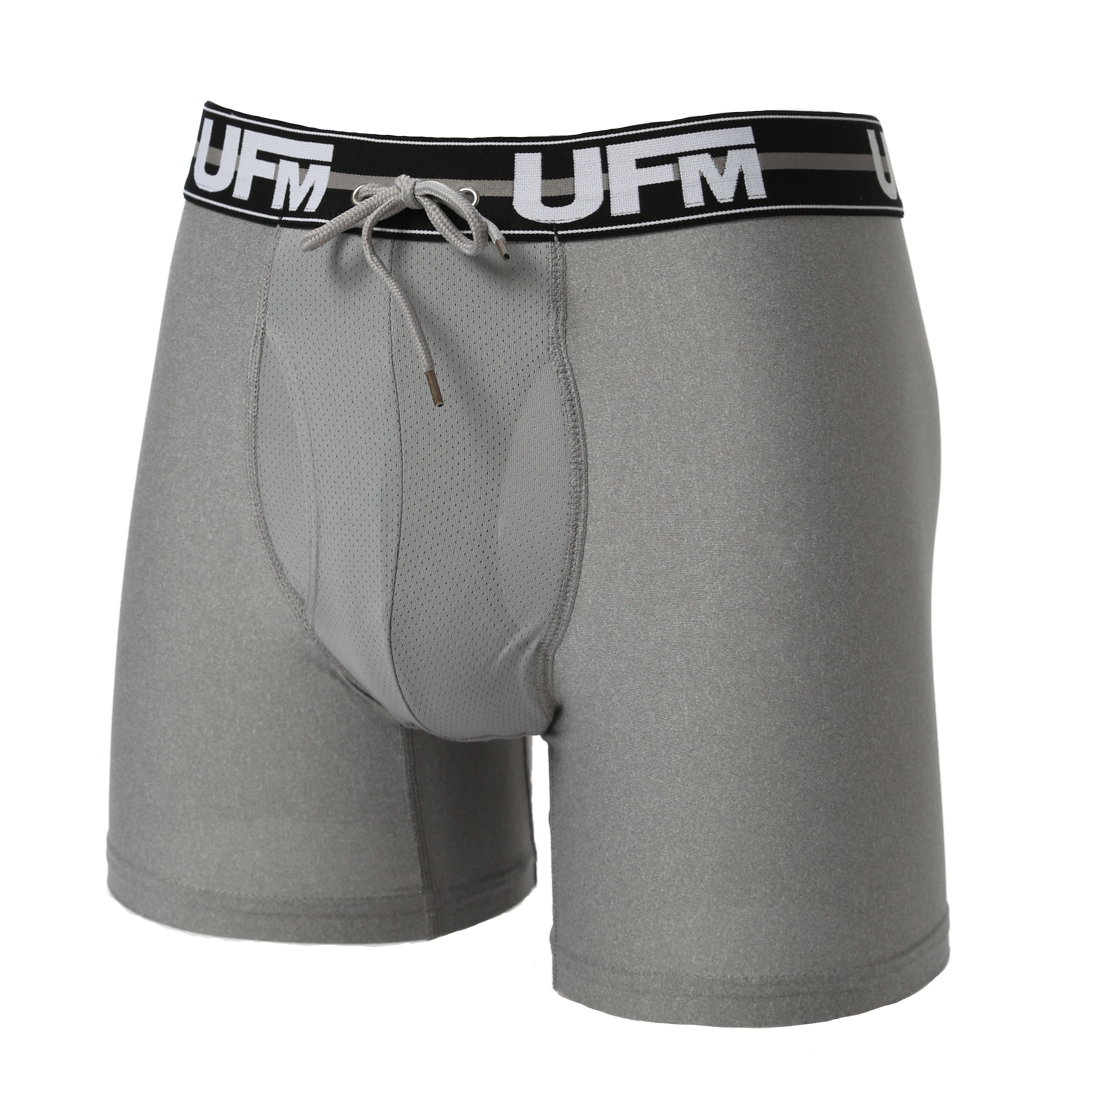 Parent UFM Underwear for Men Everyday Polyester 6 inch Original Max Boxer Brief Gray 800